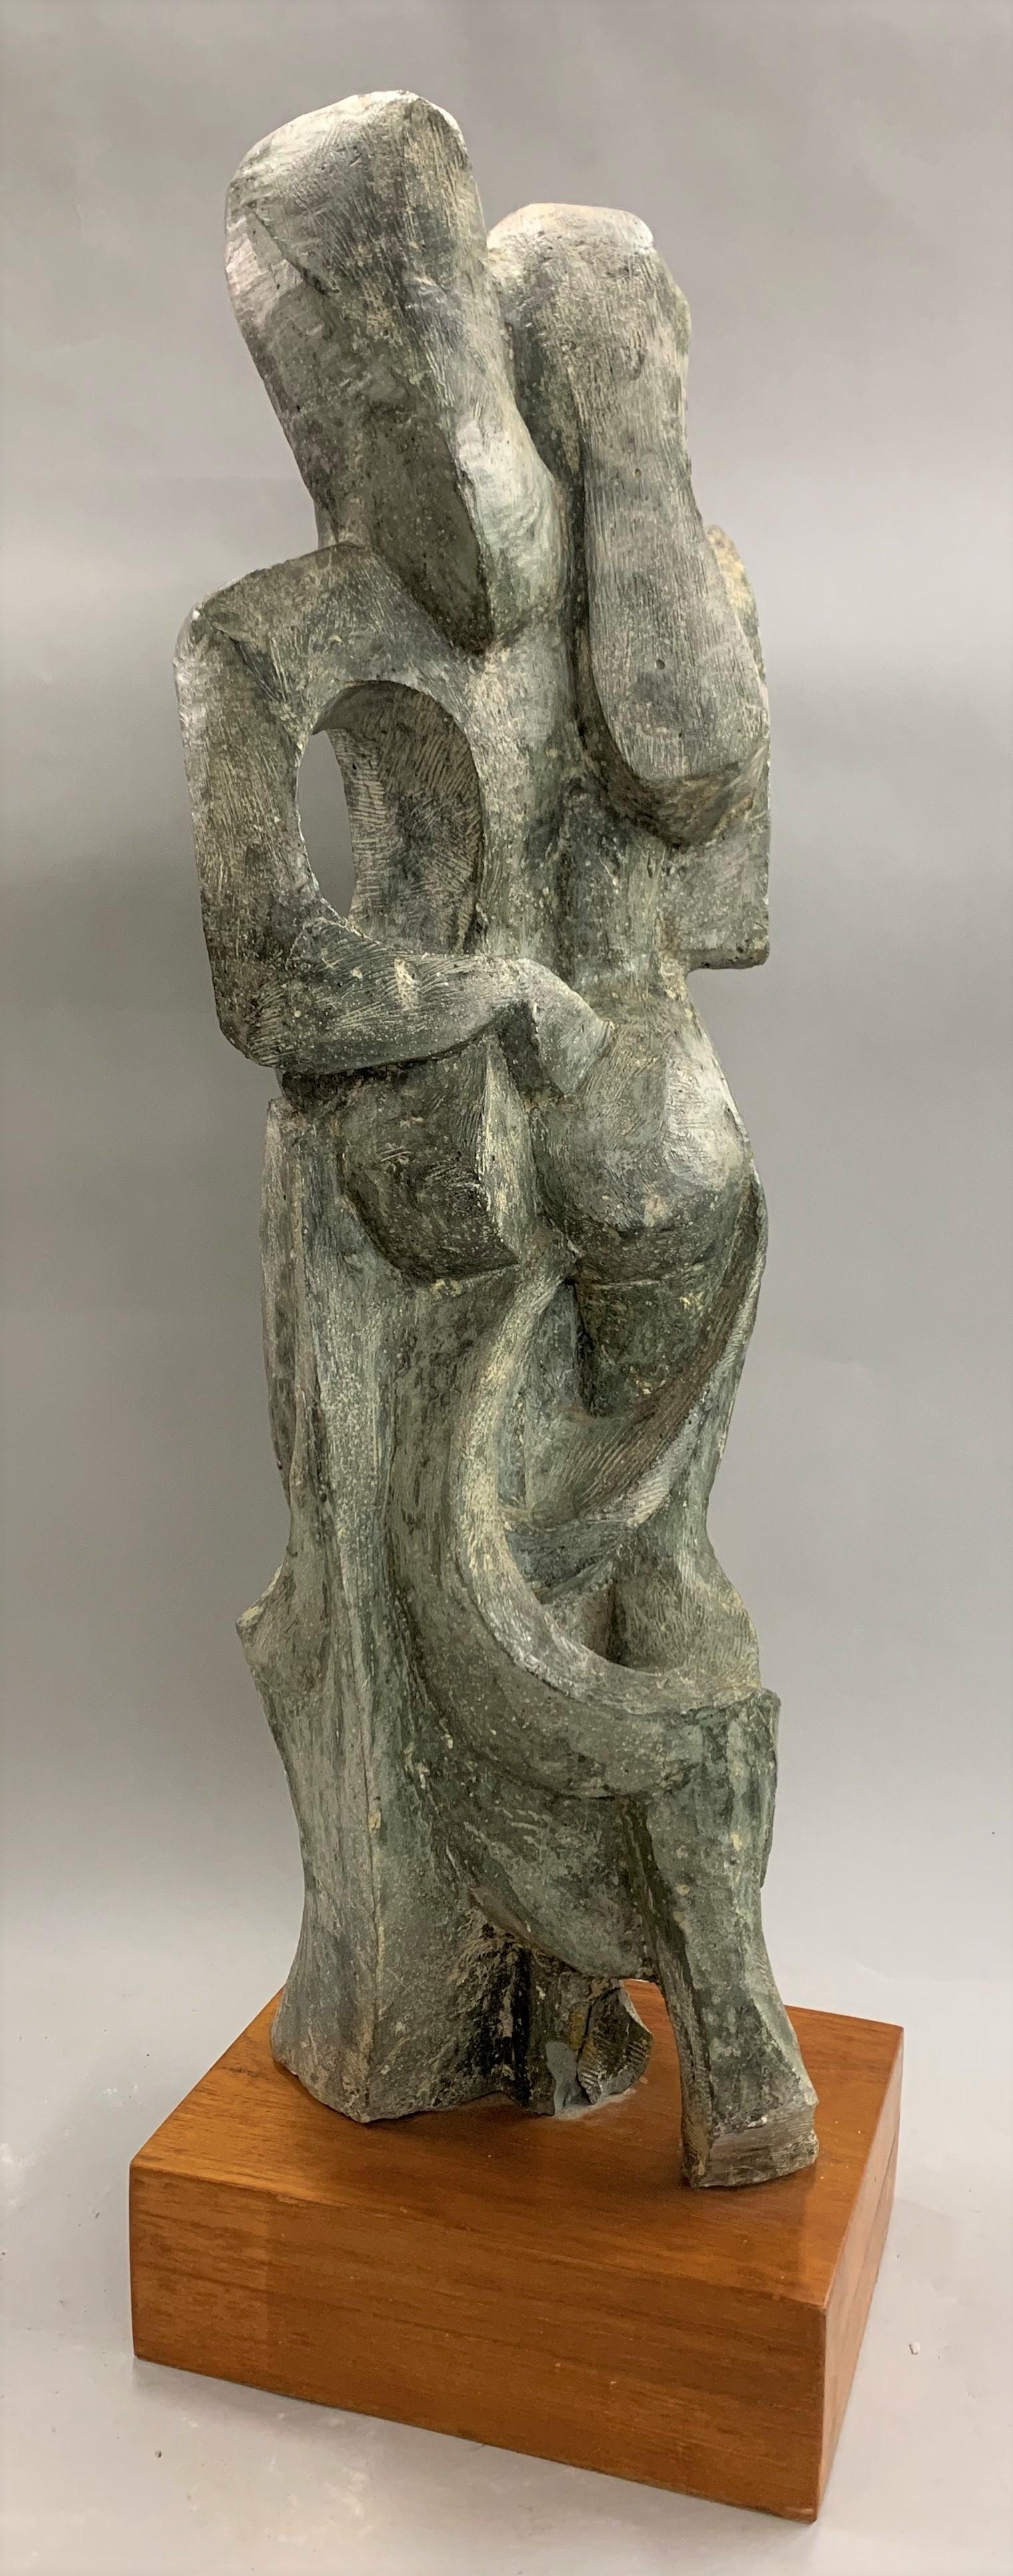 Two Women Walking - Brown Figurative Sculpture by Robert Hughes